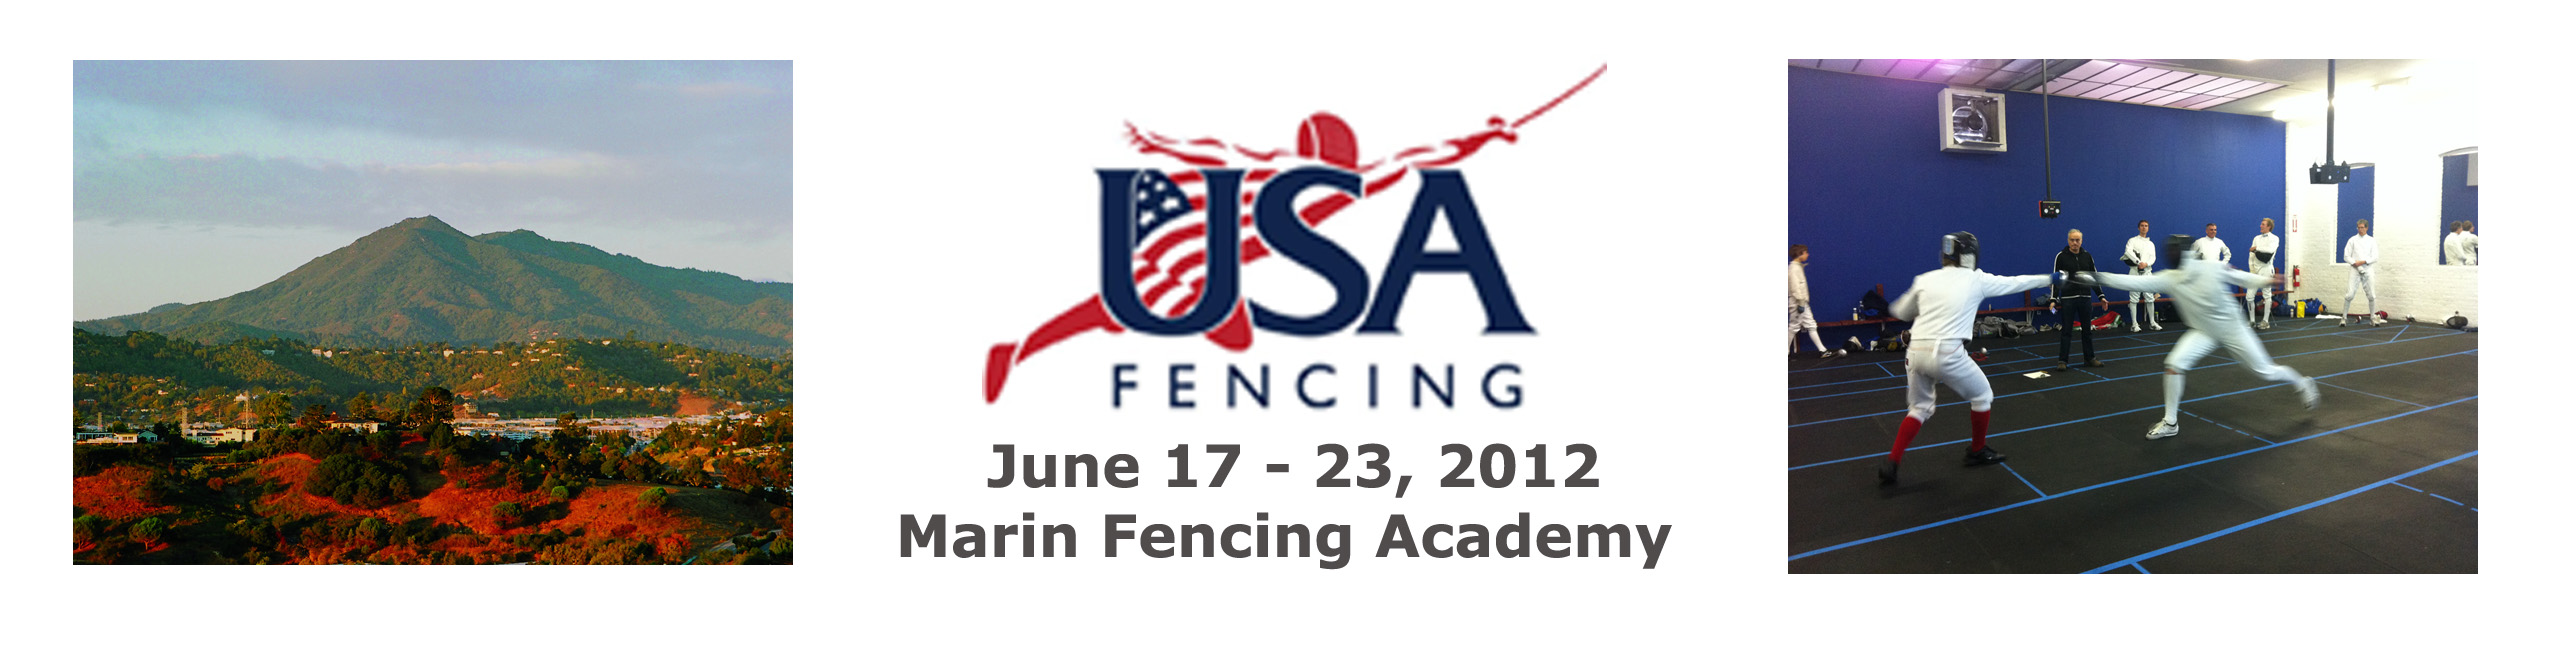 Marin Fencing Academy Camps